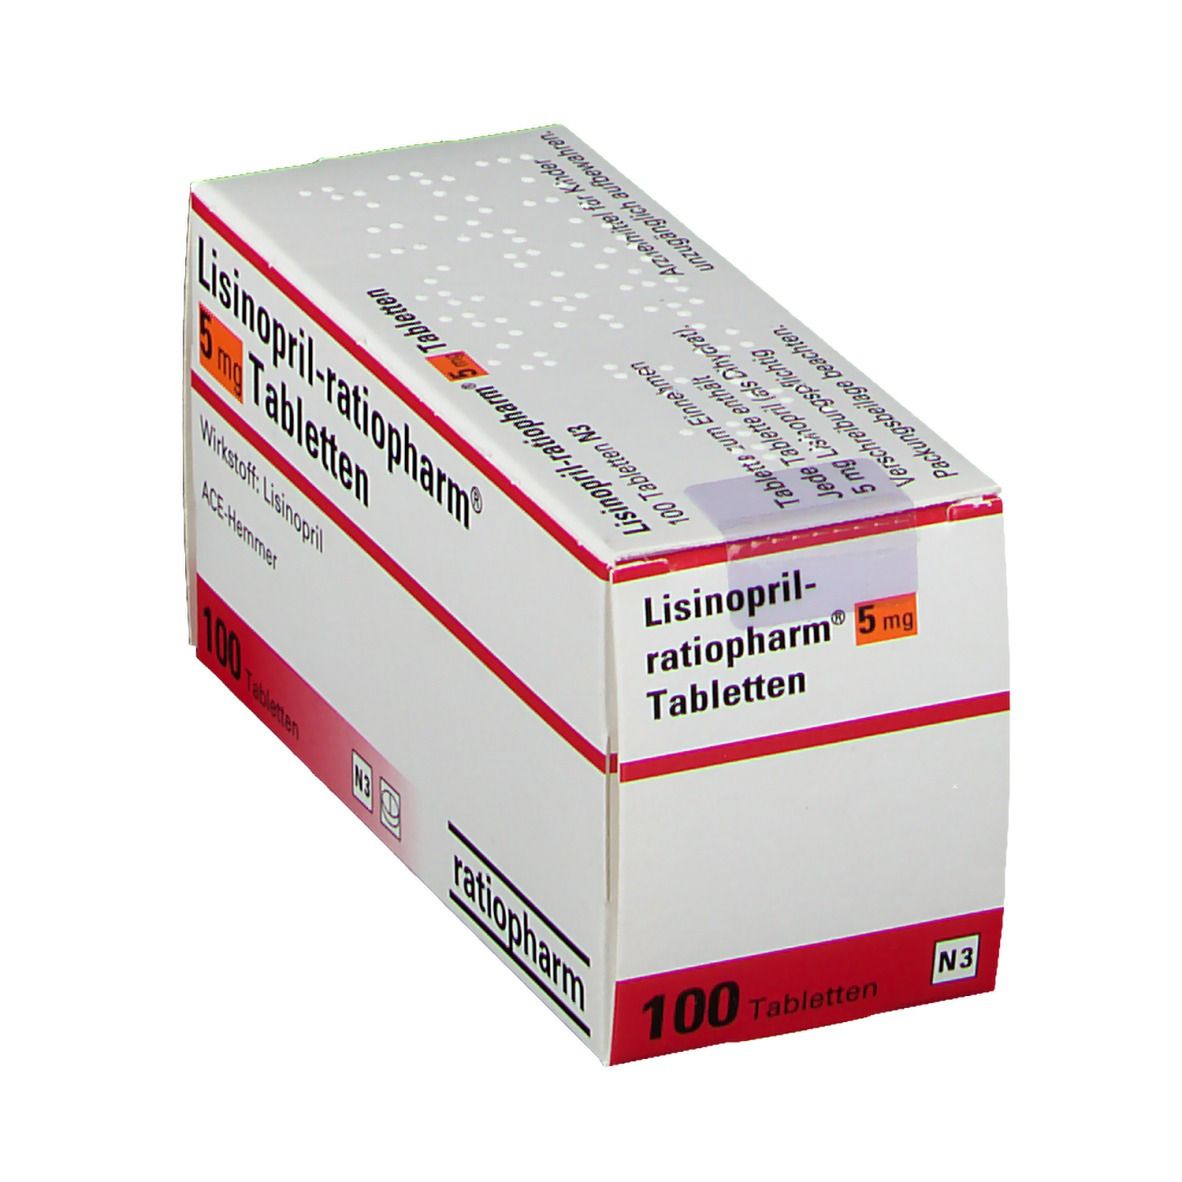 Lisinopril-ratiopharm® 5 mg